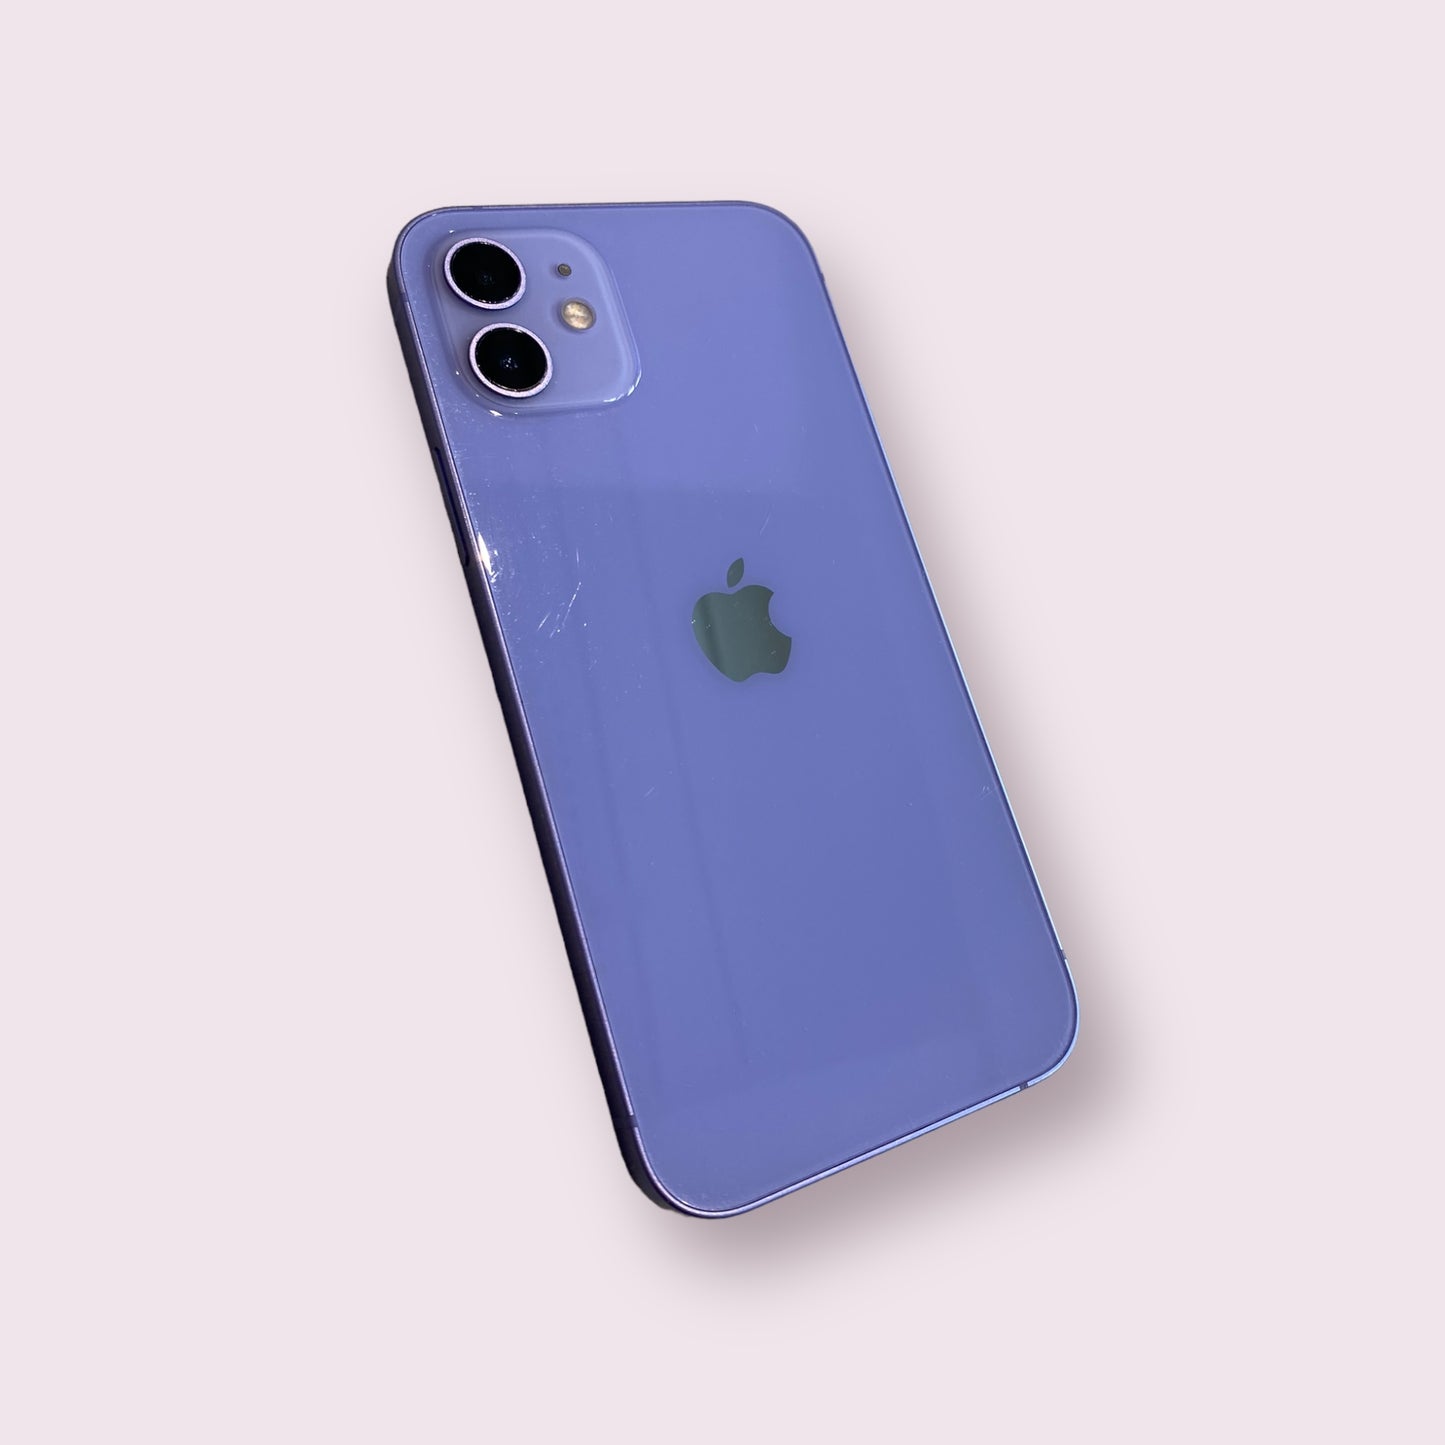 Apple iPhone 12 64GB Lavender - Unlocked - Grade B - NEW BATTERY